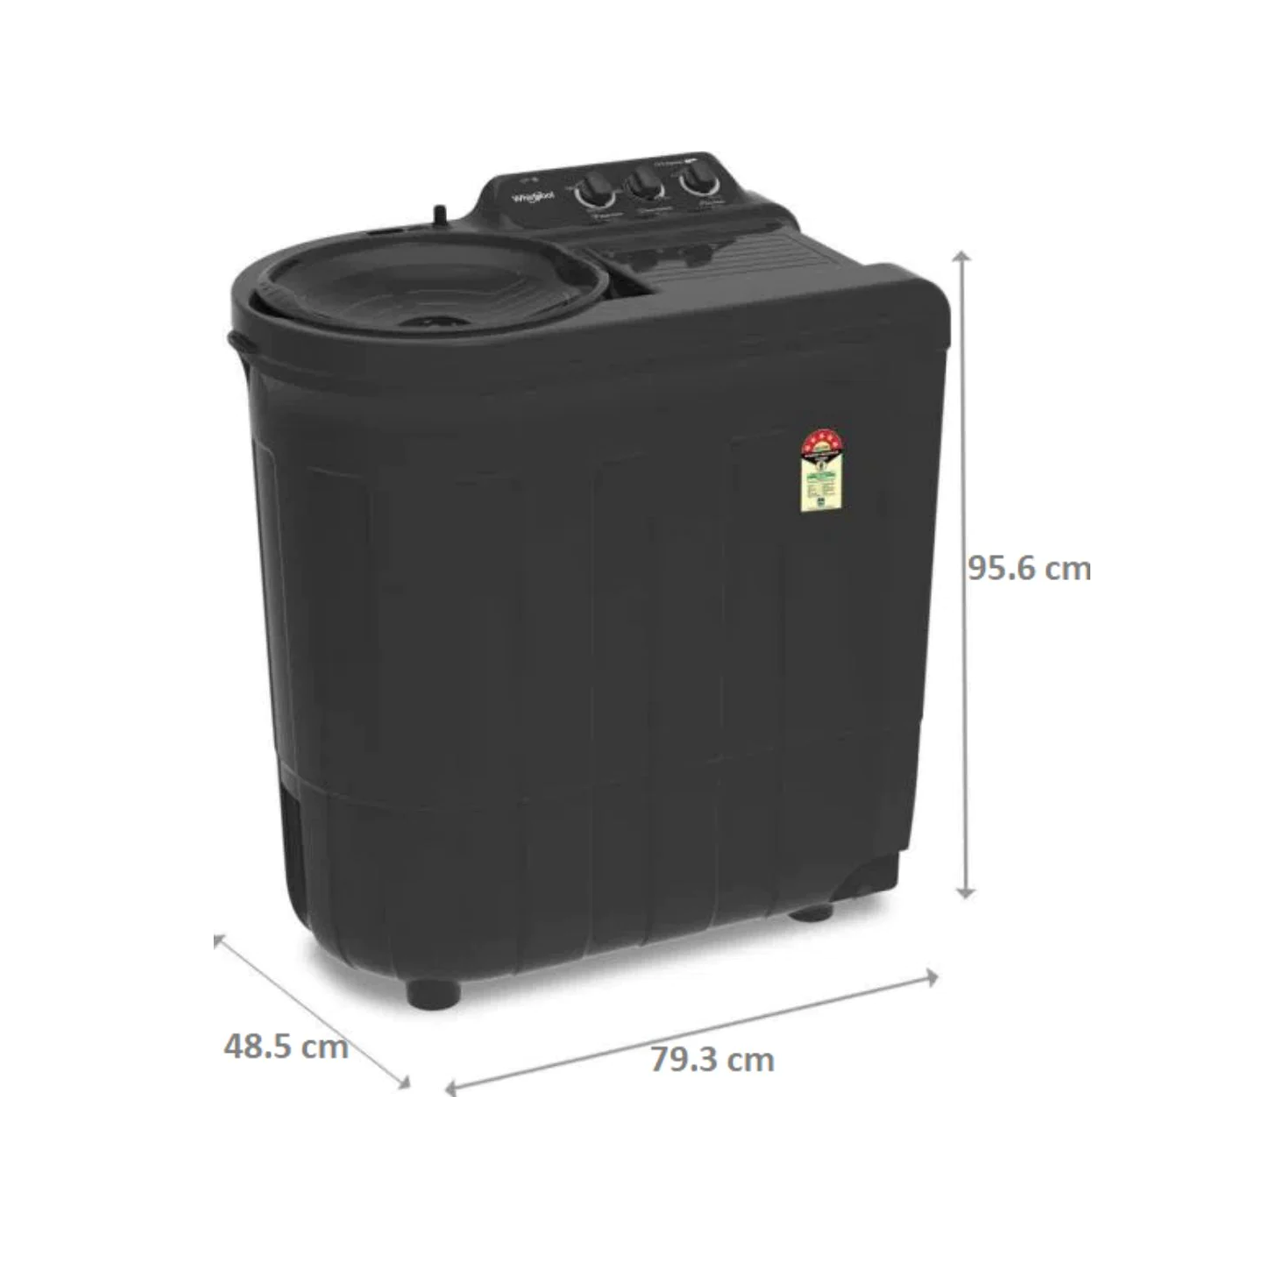 Whirlpool ACE 7.0 SUP SOAK 7 Kg Semi Automatic Top Load Washing Machine, Grey (30299)